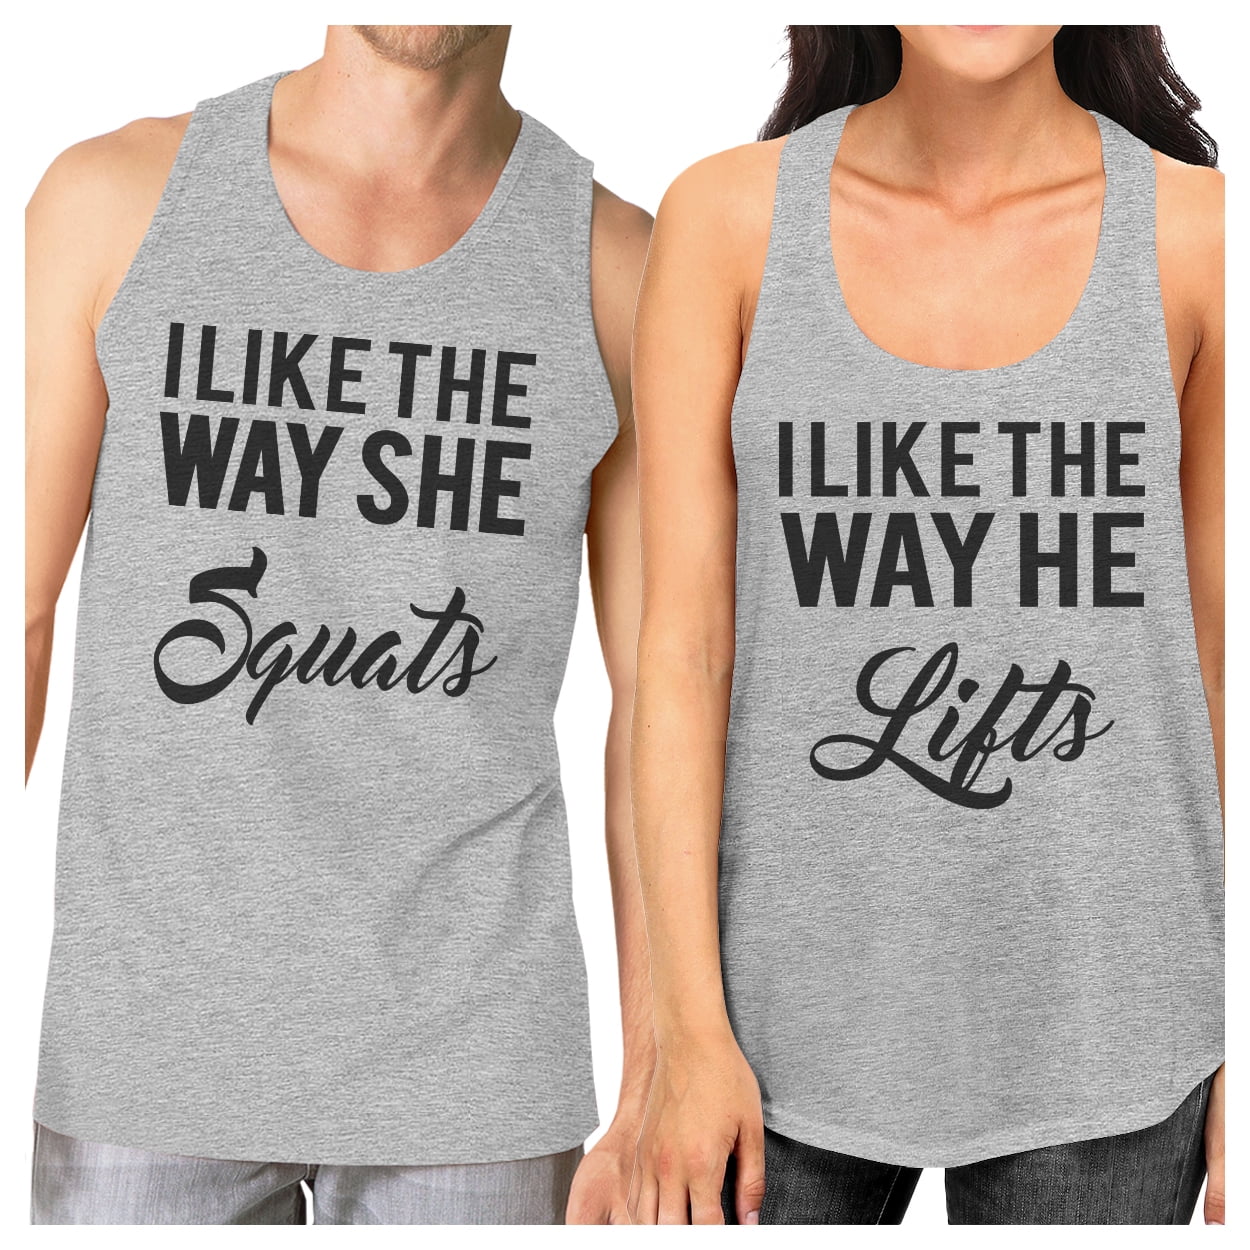 I Like The Way He Lifts Womens Gym Tank. Mens Gym Shirt I Like The Way She Squats Couples Workout Shirts His and Hers Workout Shirts